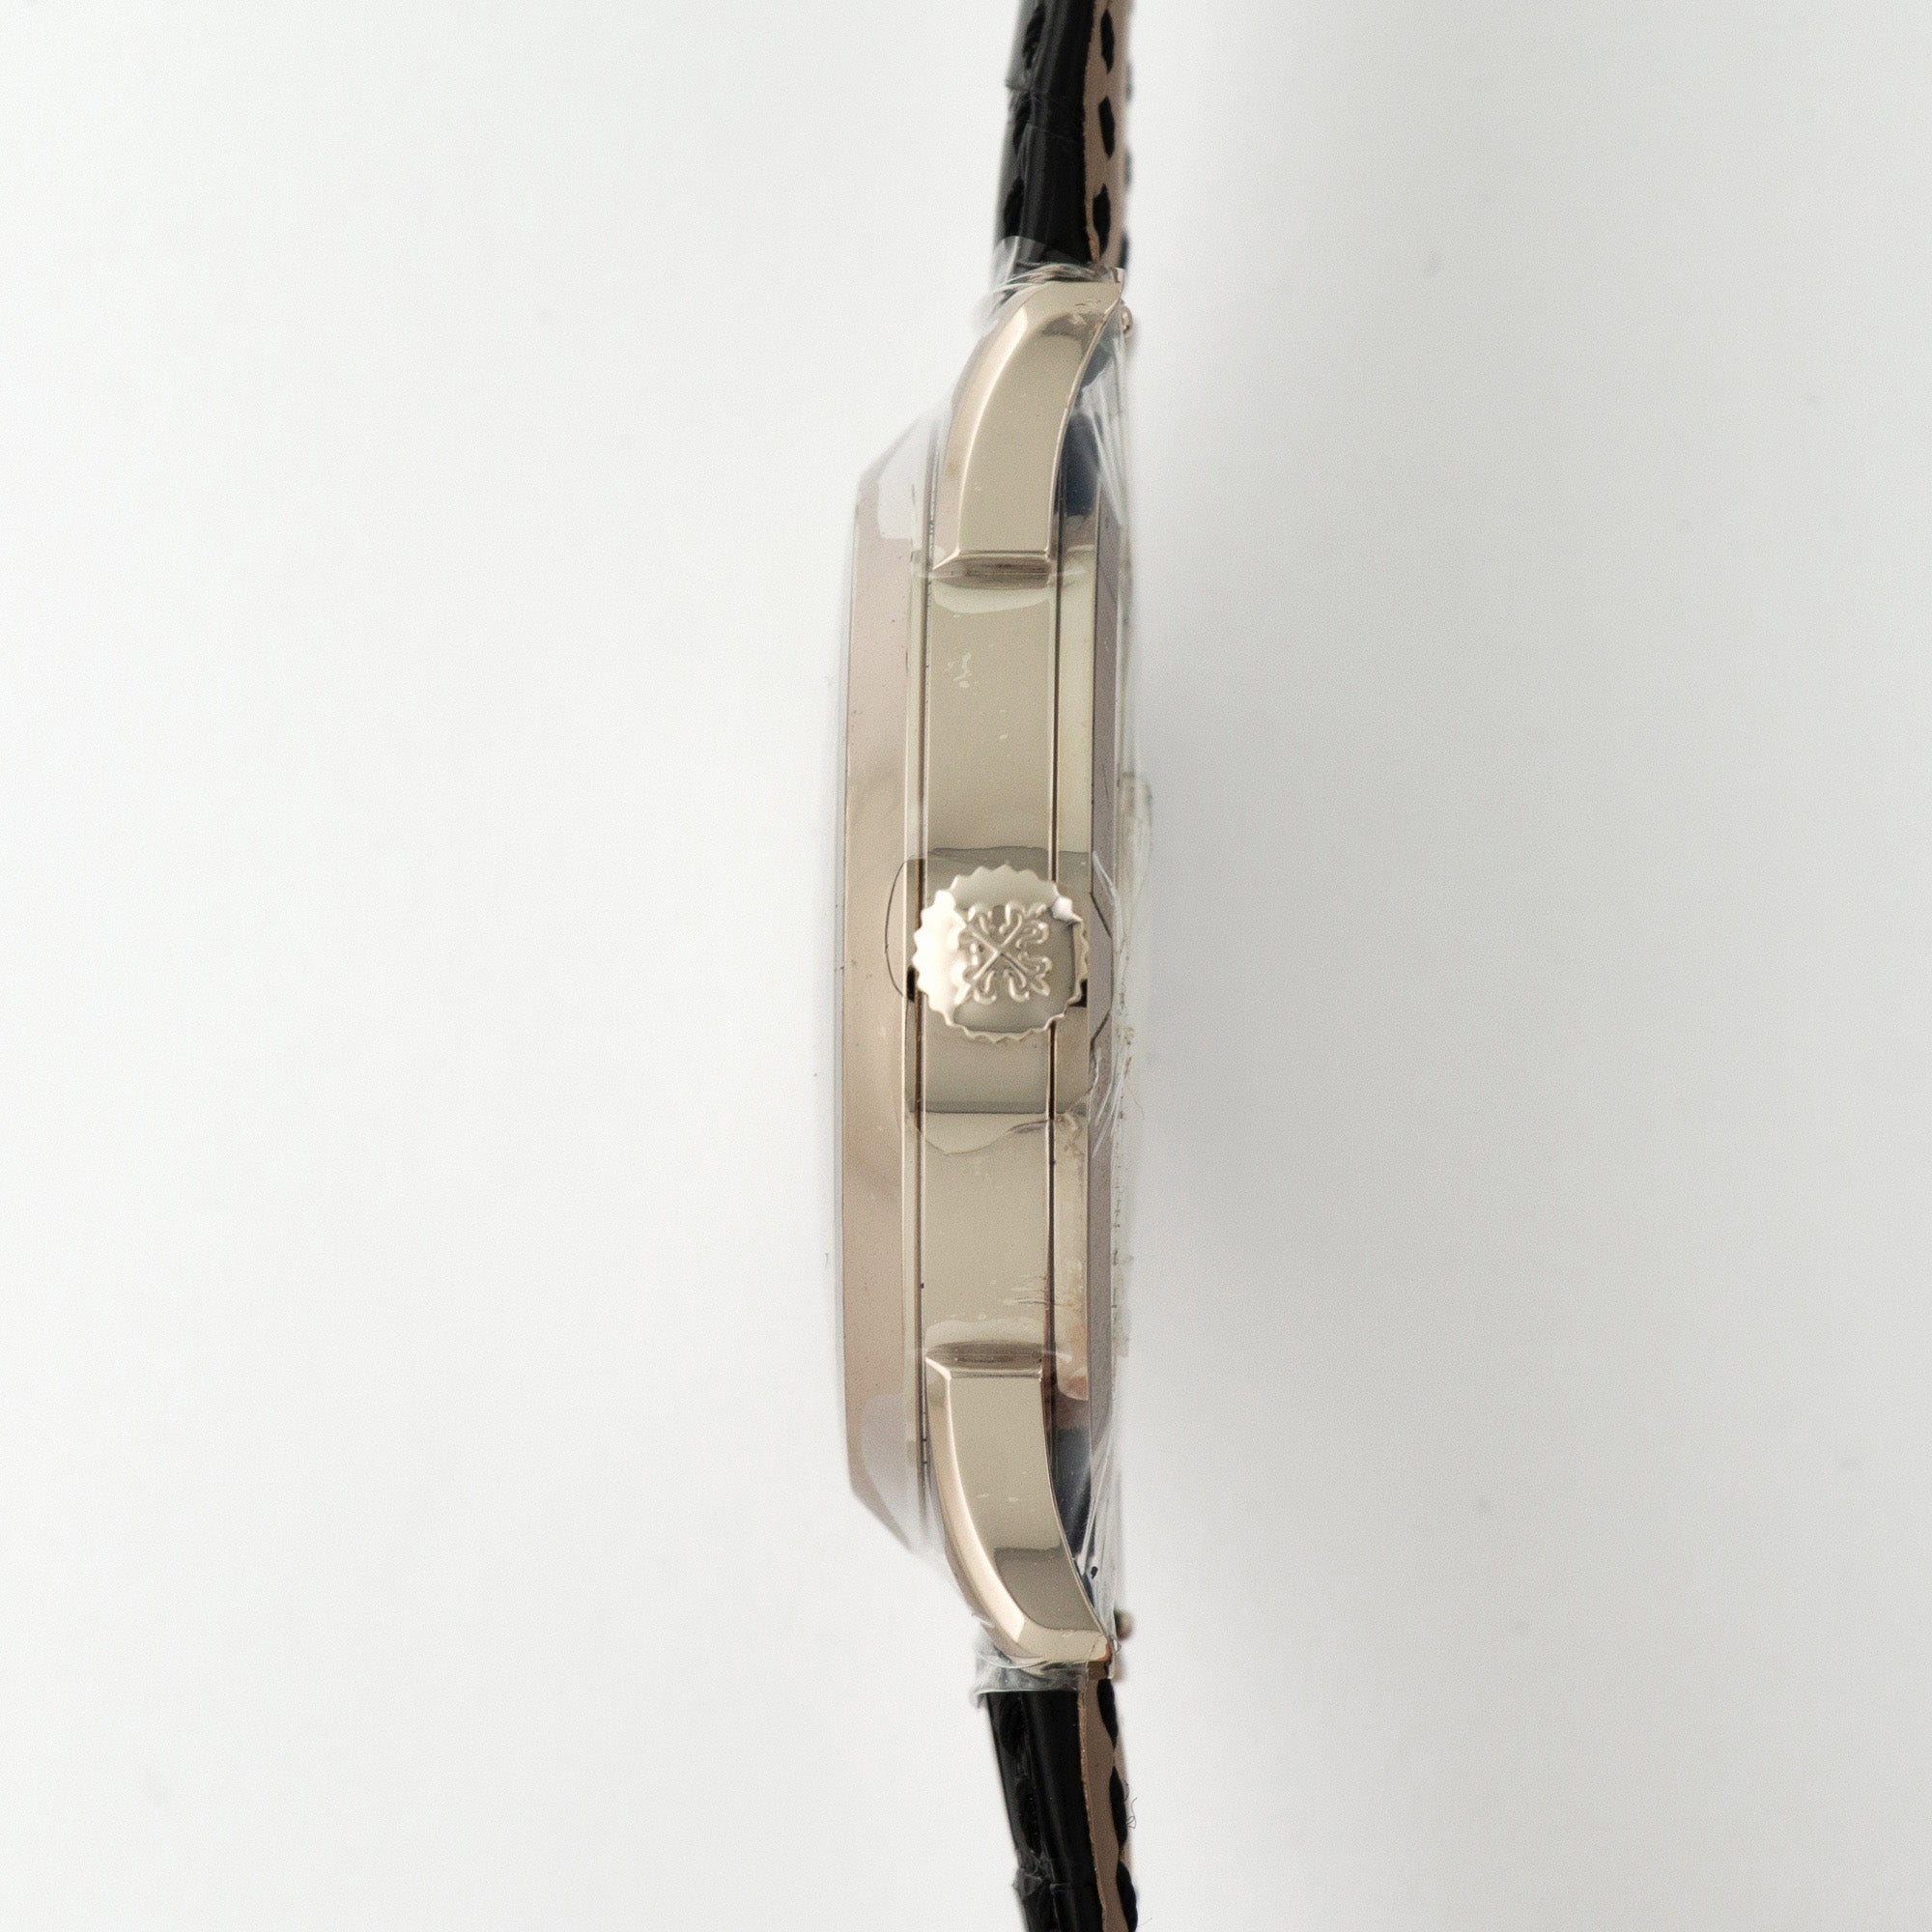 Patek Philippe - Patek Philippe White Gold World Time Watch Ref. 5230 - The Keystone Watches